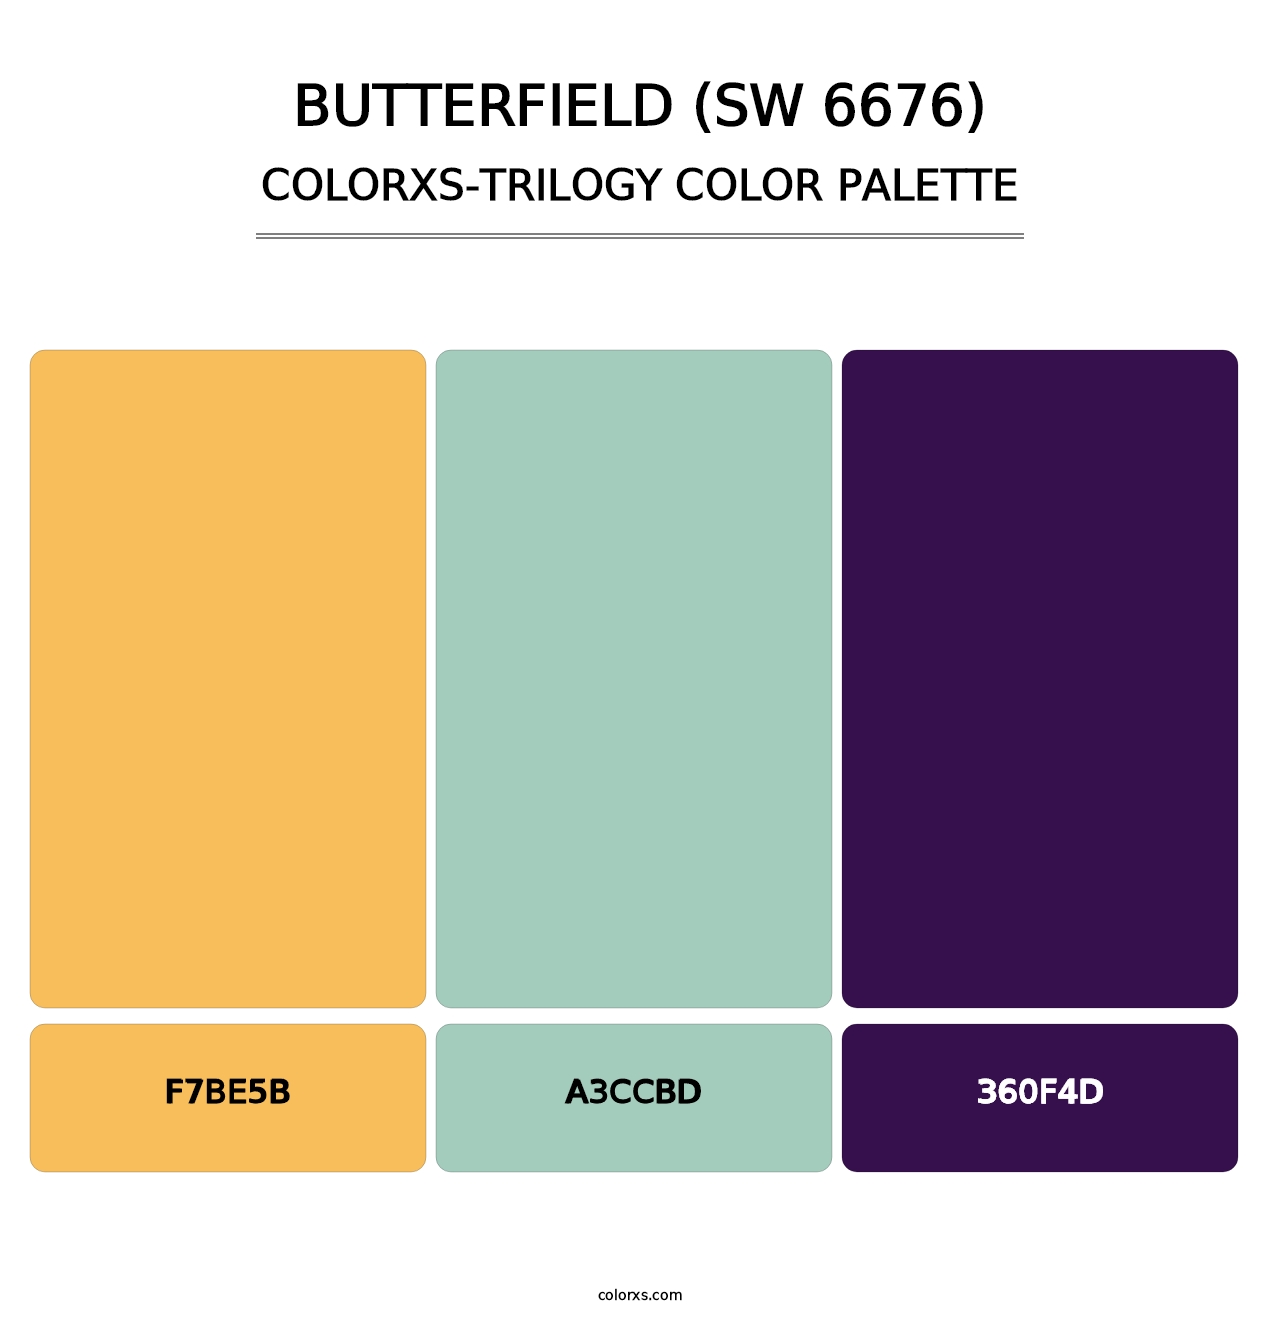 Butterfield (SW 6676) - Colorxs Trilogy Palette